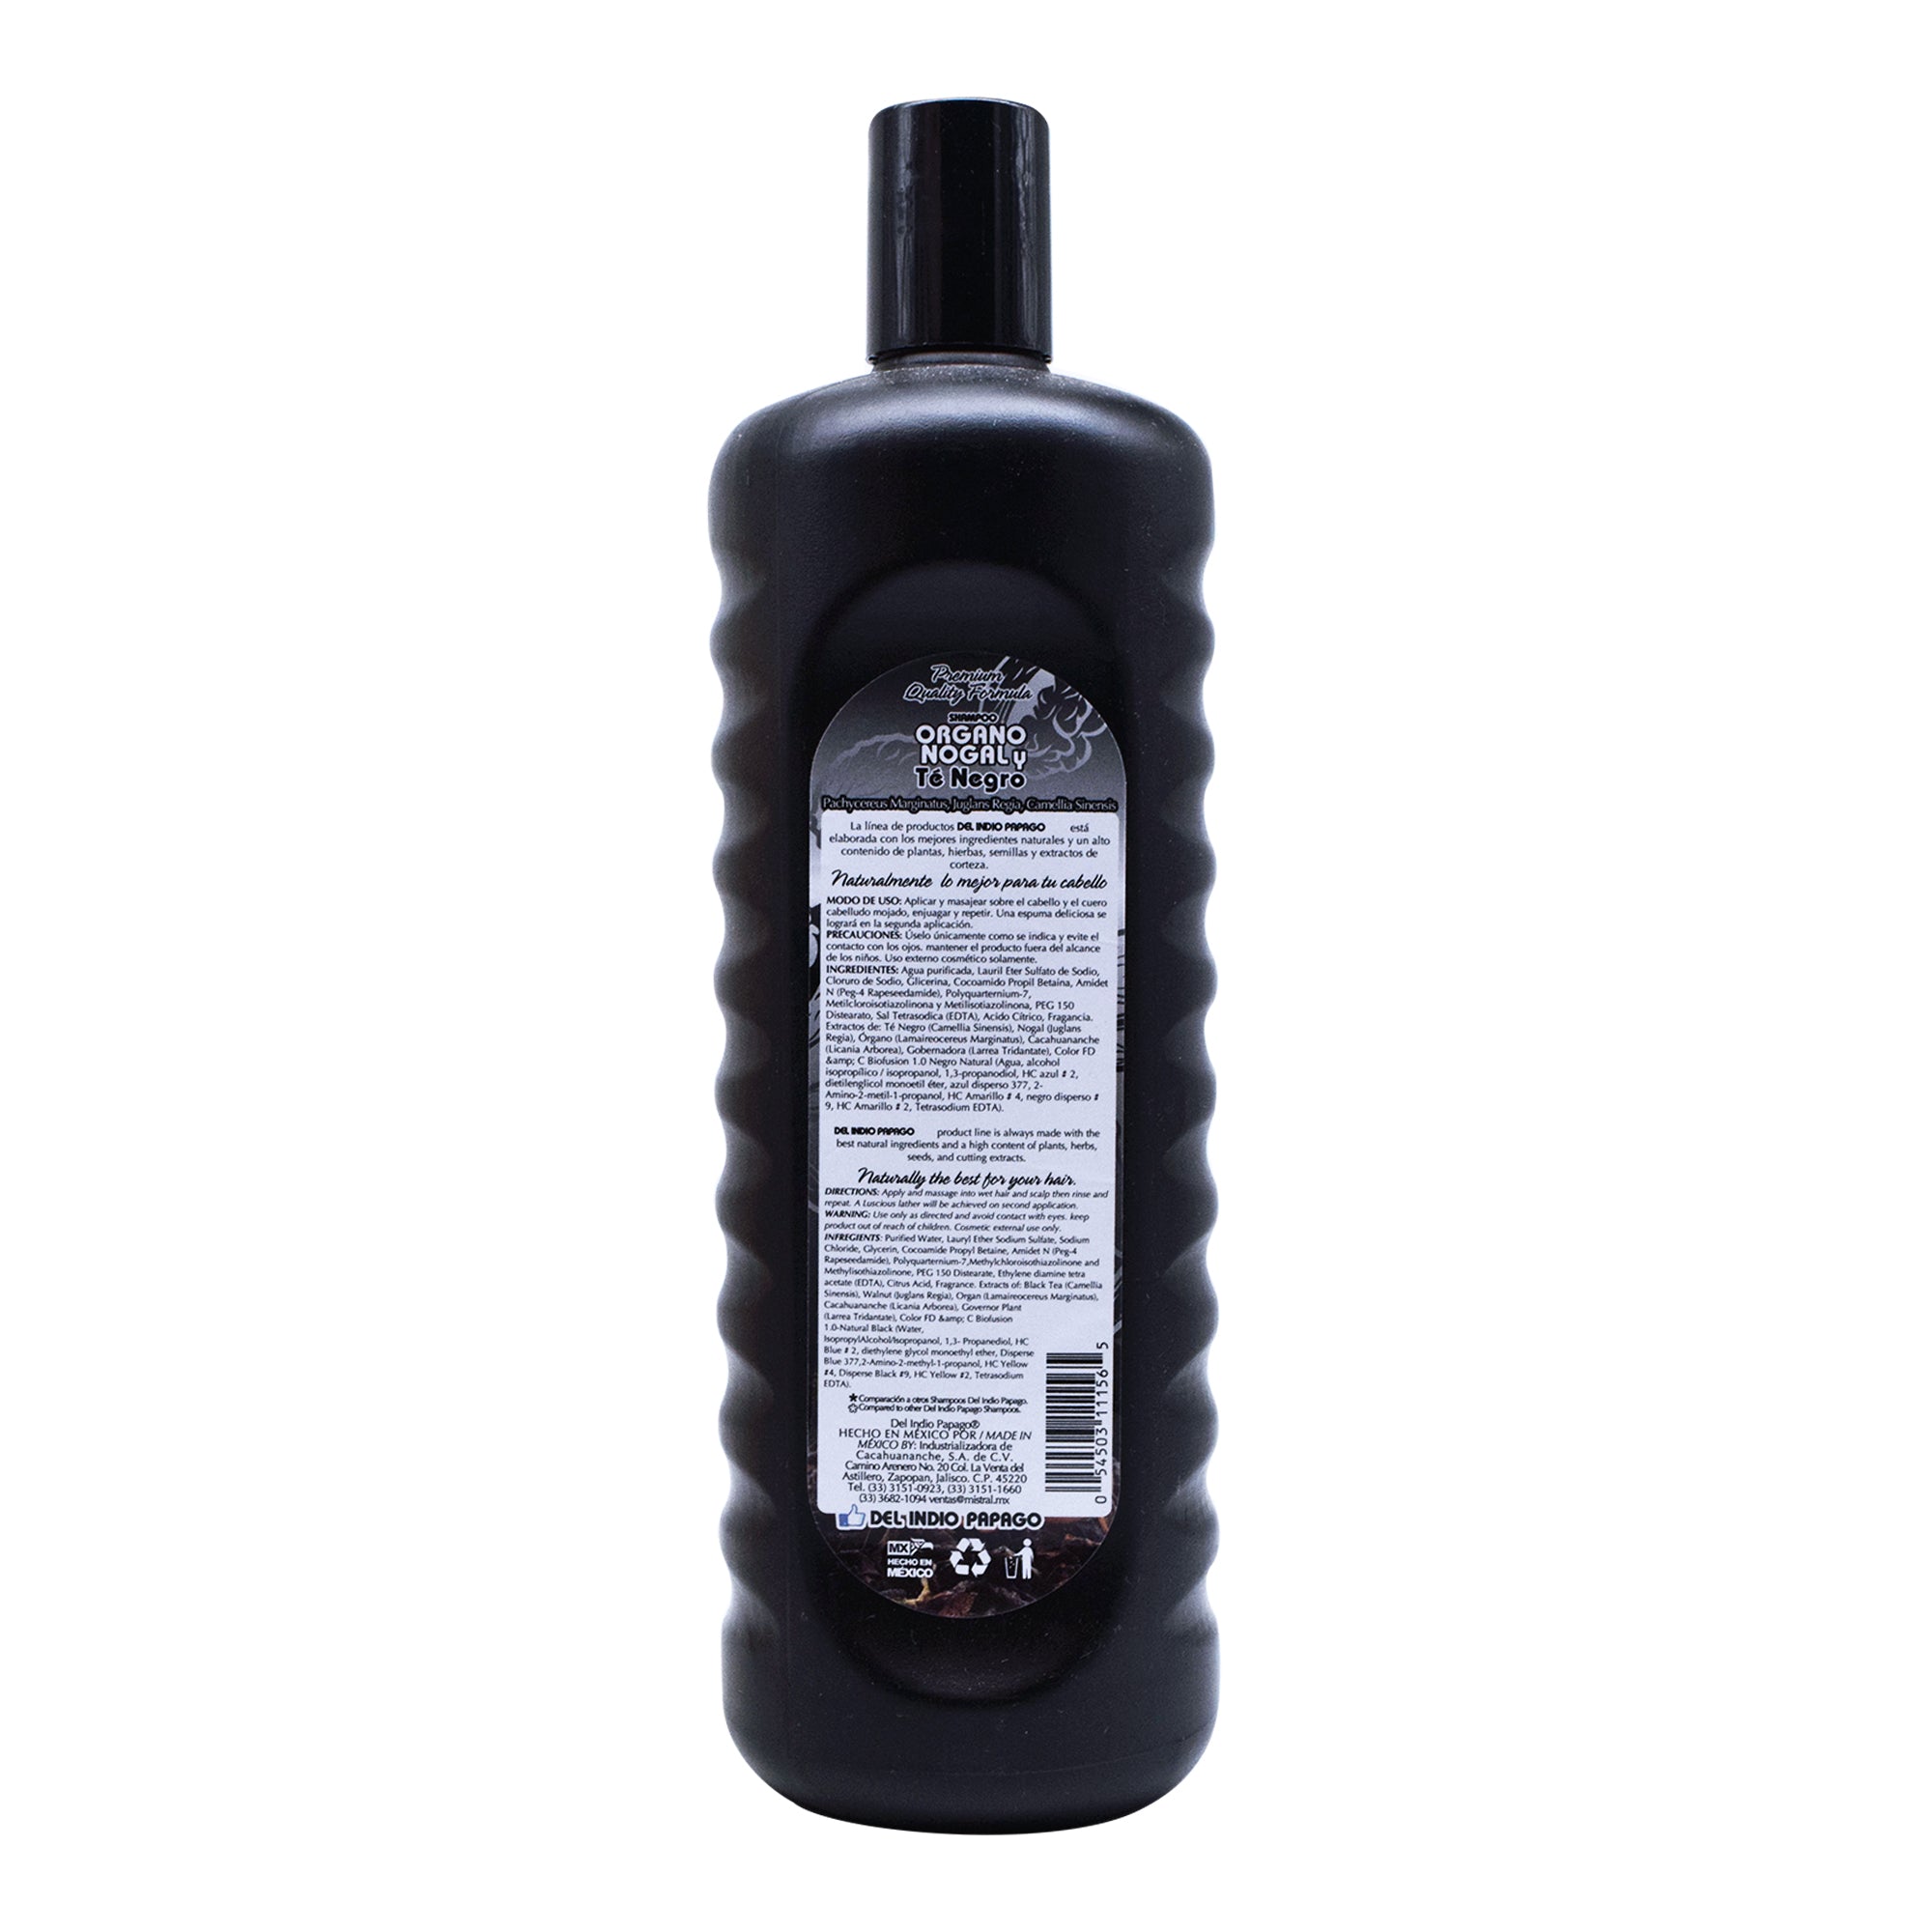 Shampoo organo nogal y te negro 1.1 l